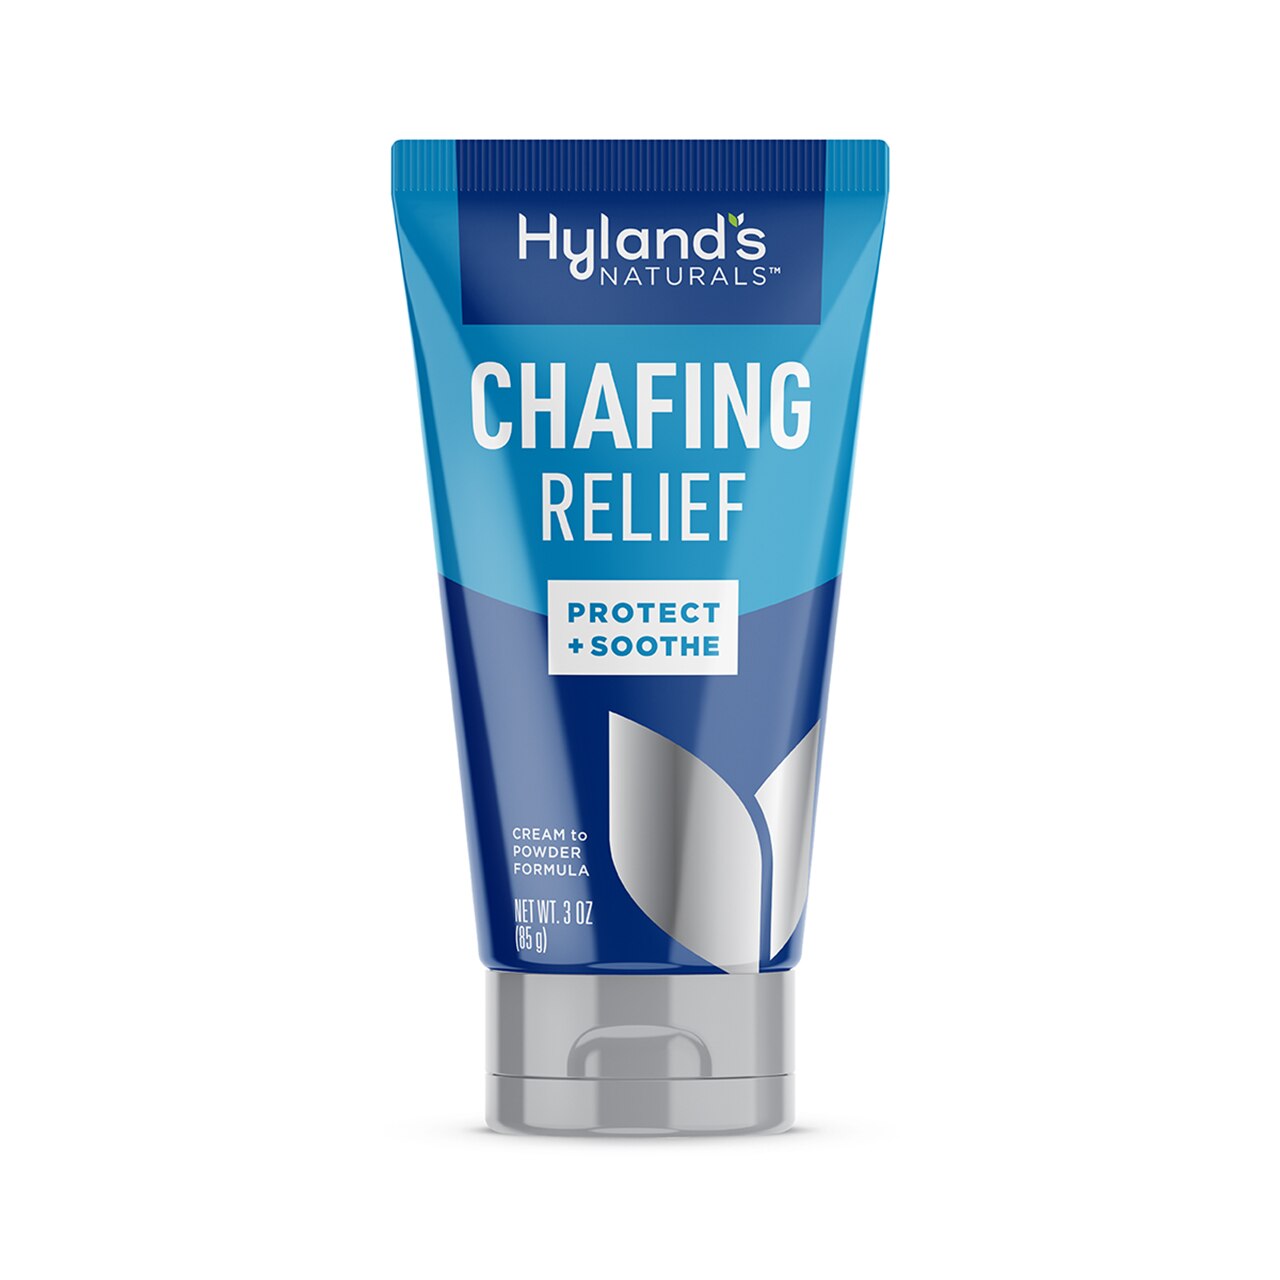 Hyland's Chafing Relief Cream to Powder Formula, 3 OZ